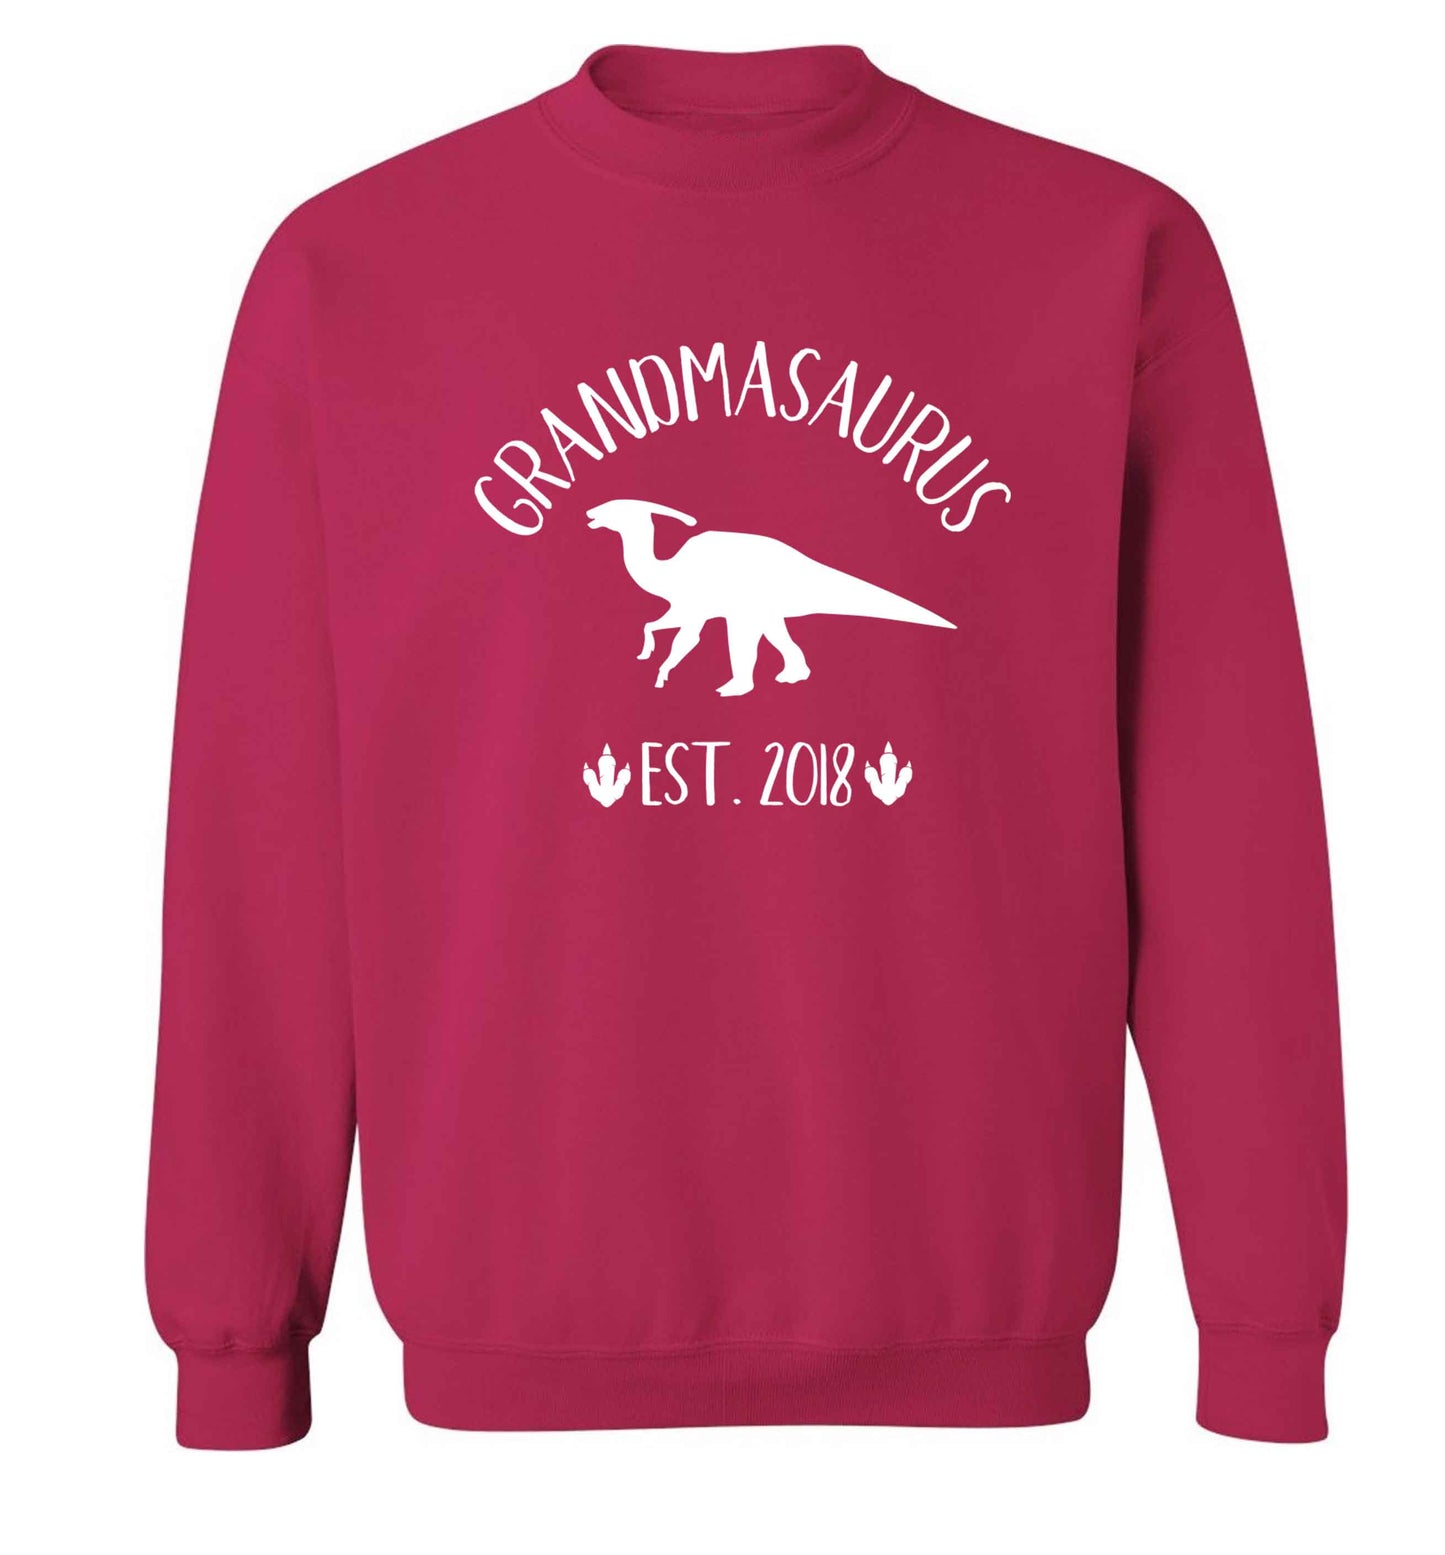 Personalised grandmasaurus since (custom date) Adult's unisex pink Sweater 2XL